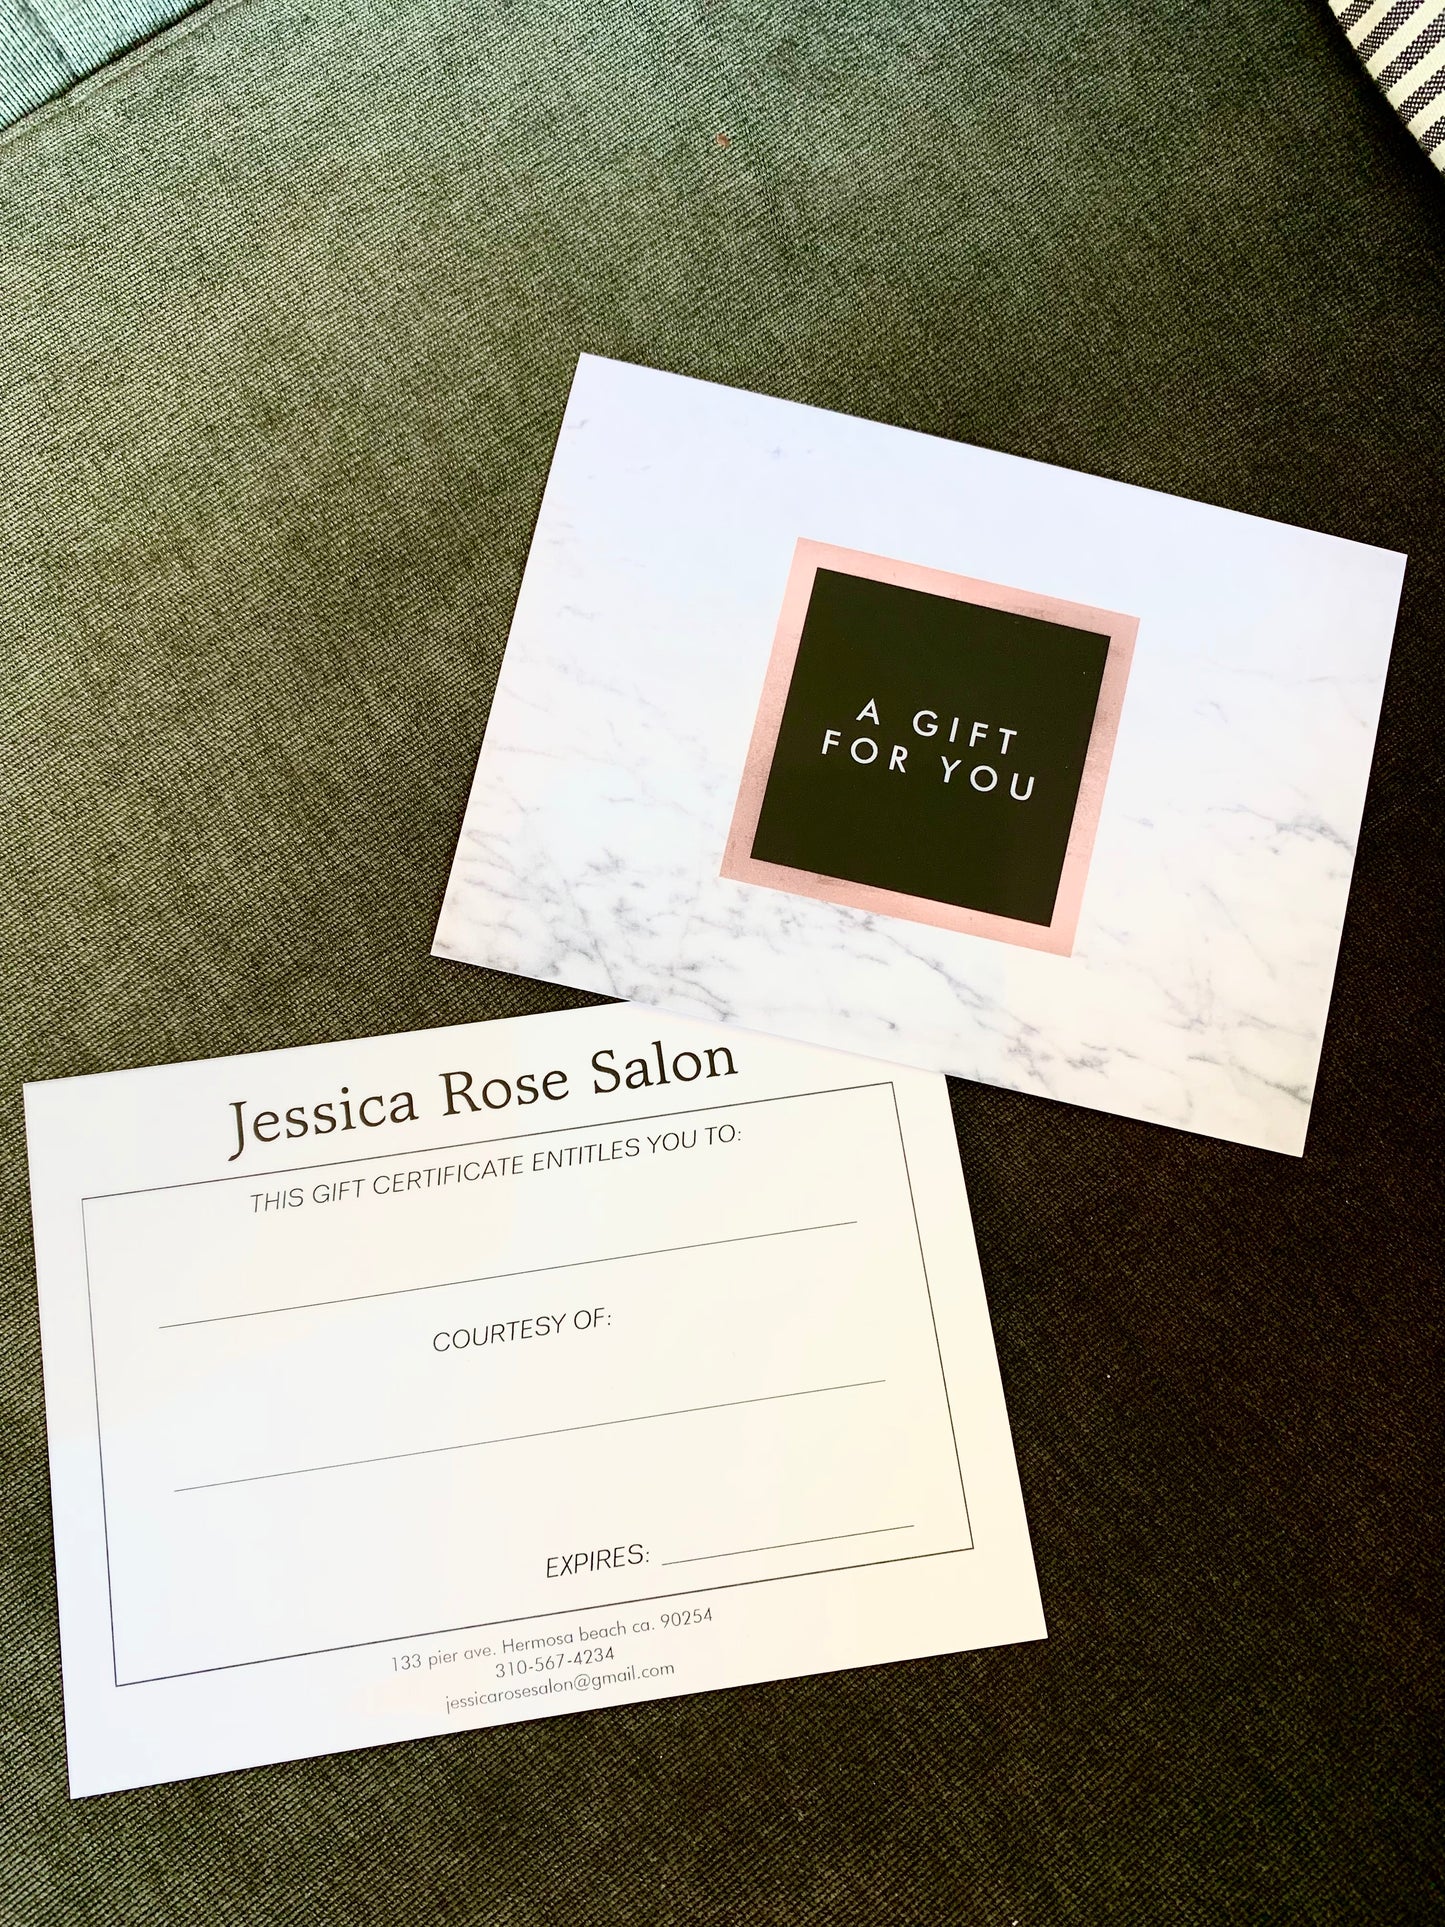 Jessica Rose Salon Gift Card